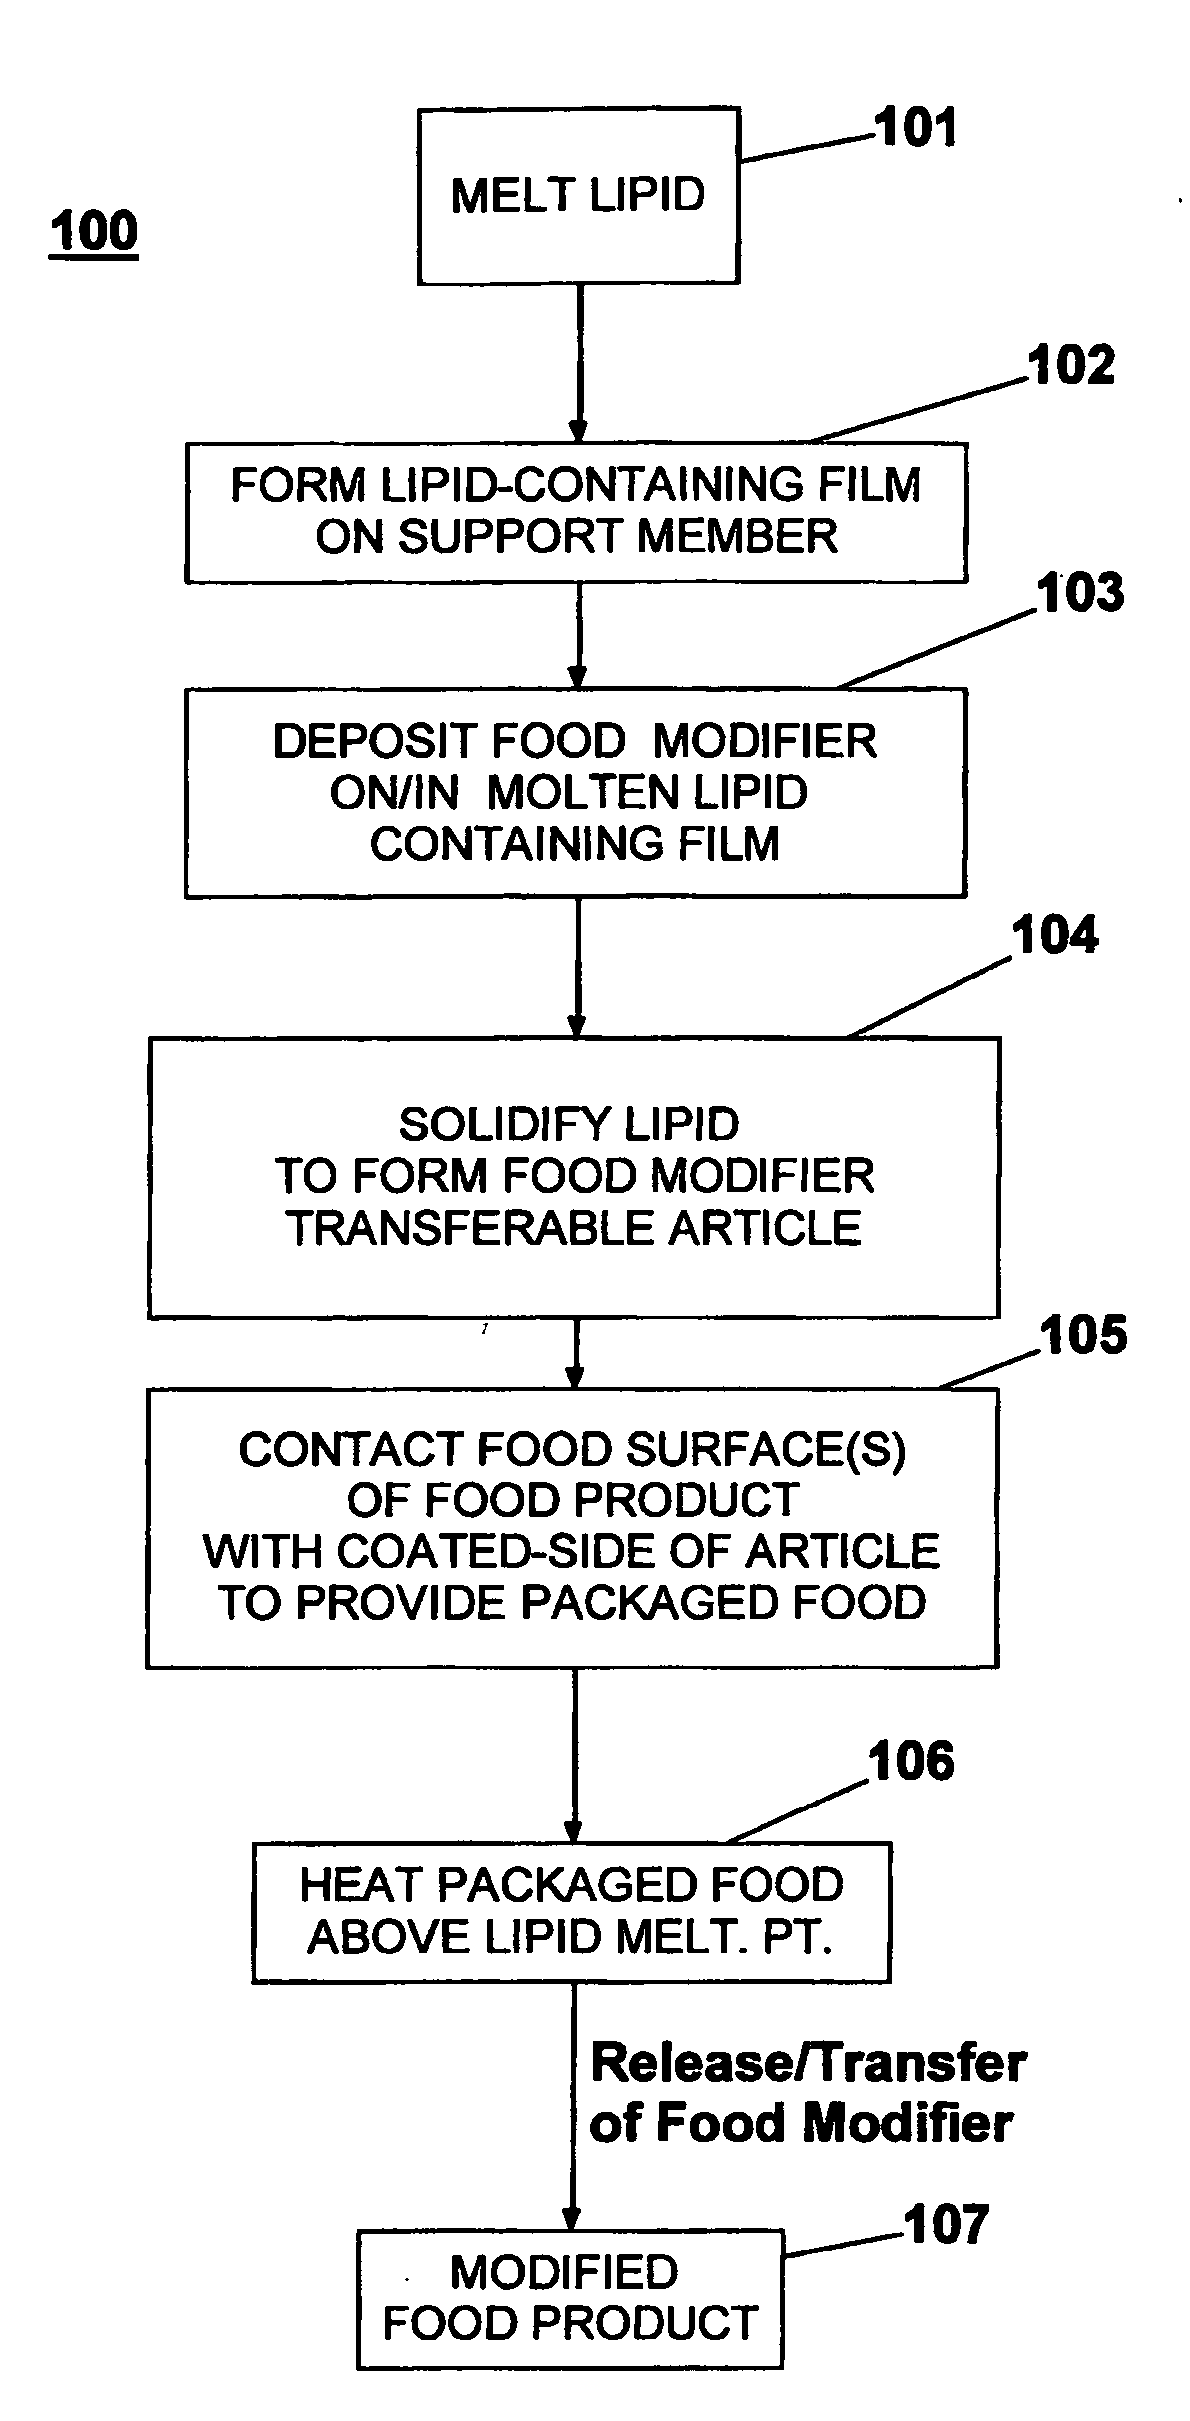 Food modifier transferable article